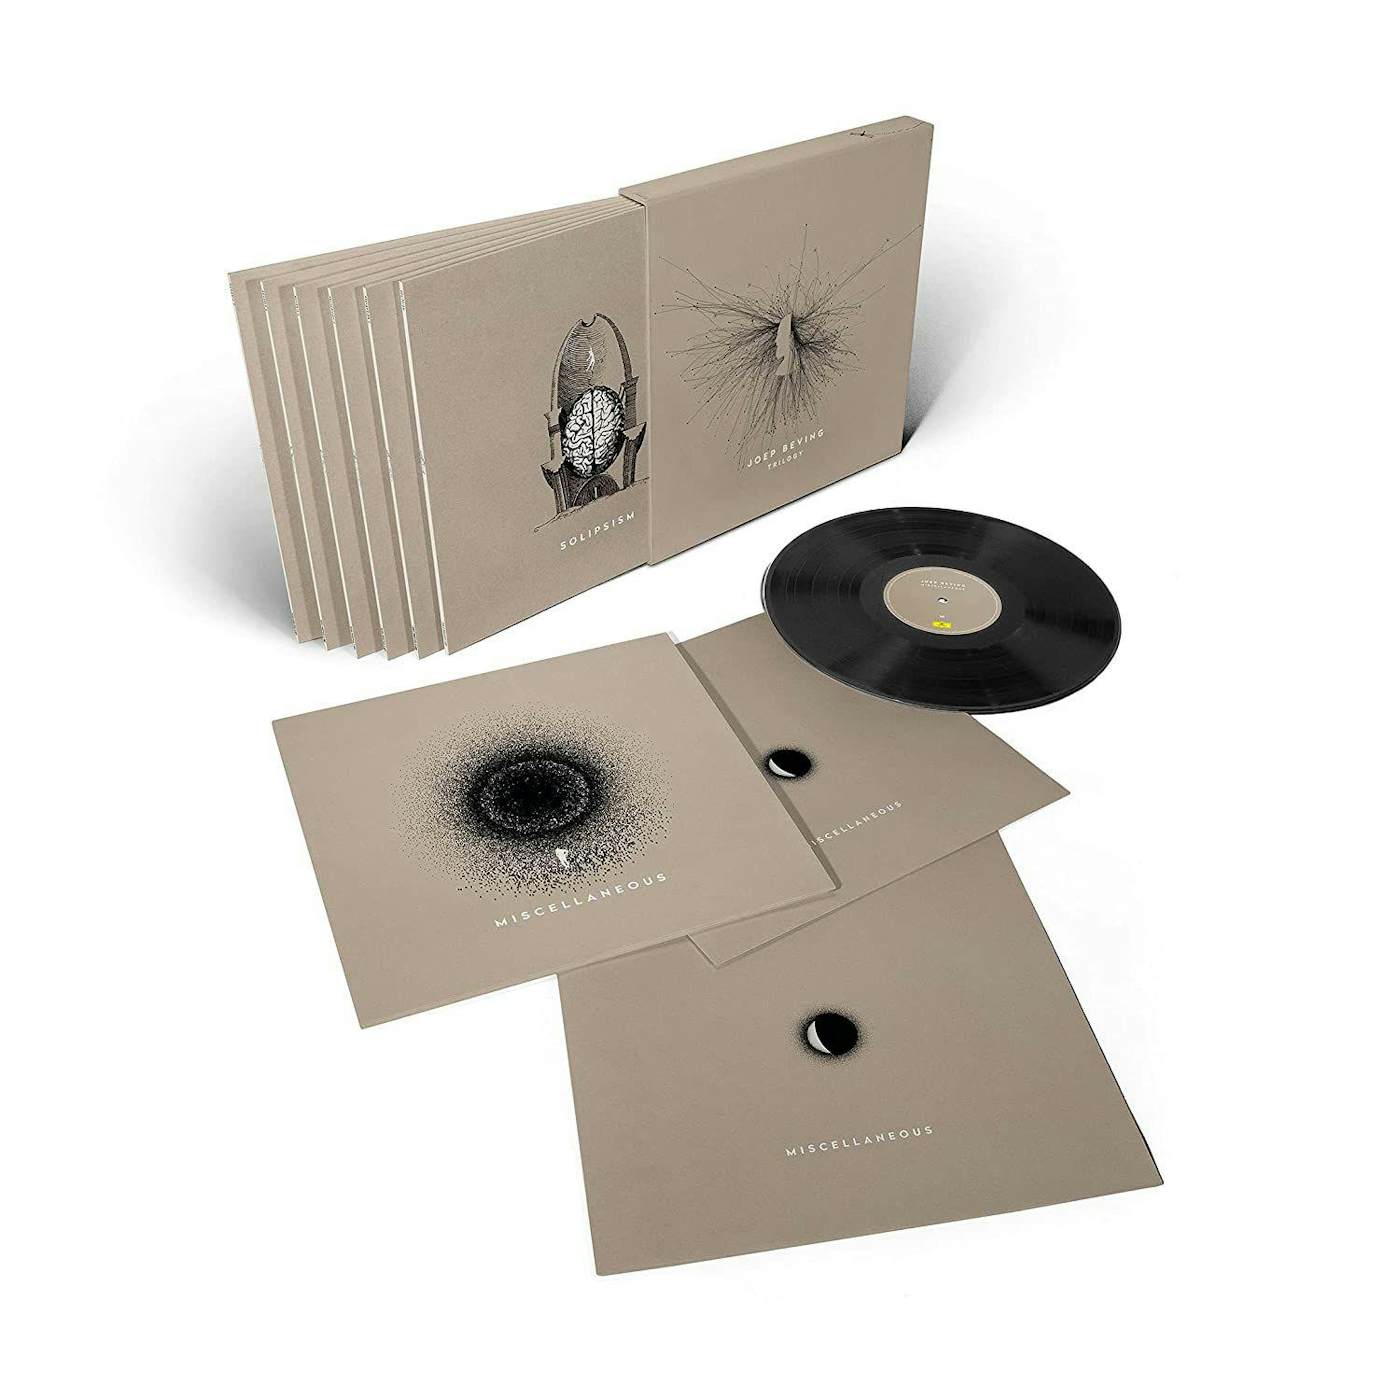 Joep Beving Trilogy (Deluxe 7 LP Box Set) (Vinyl)